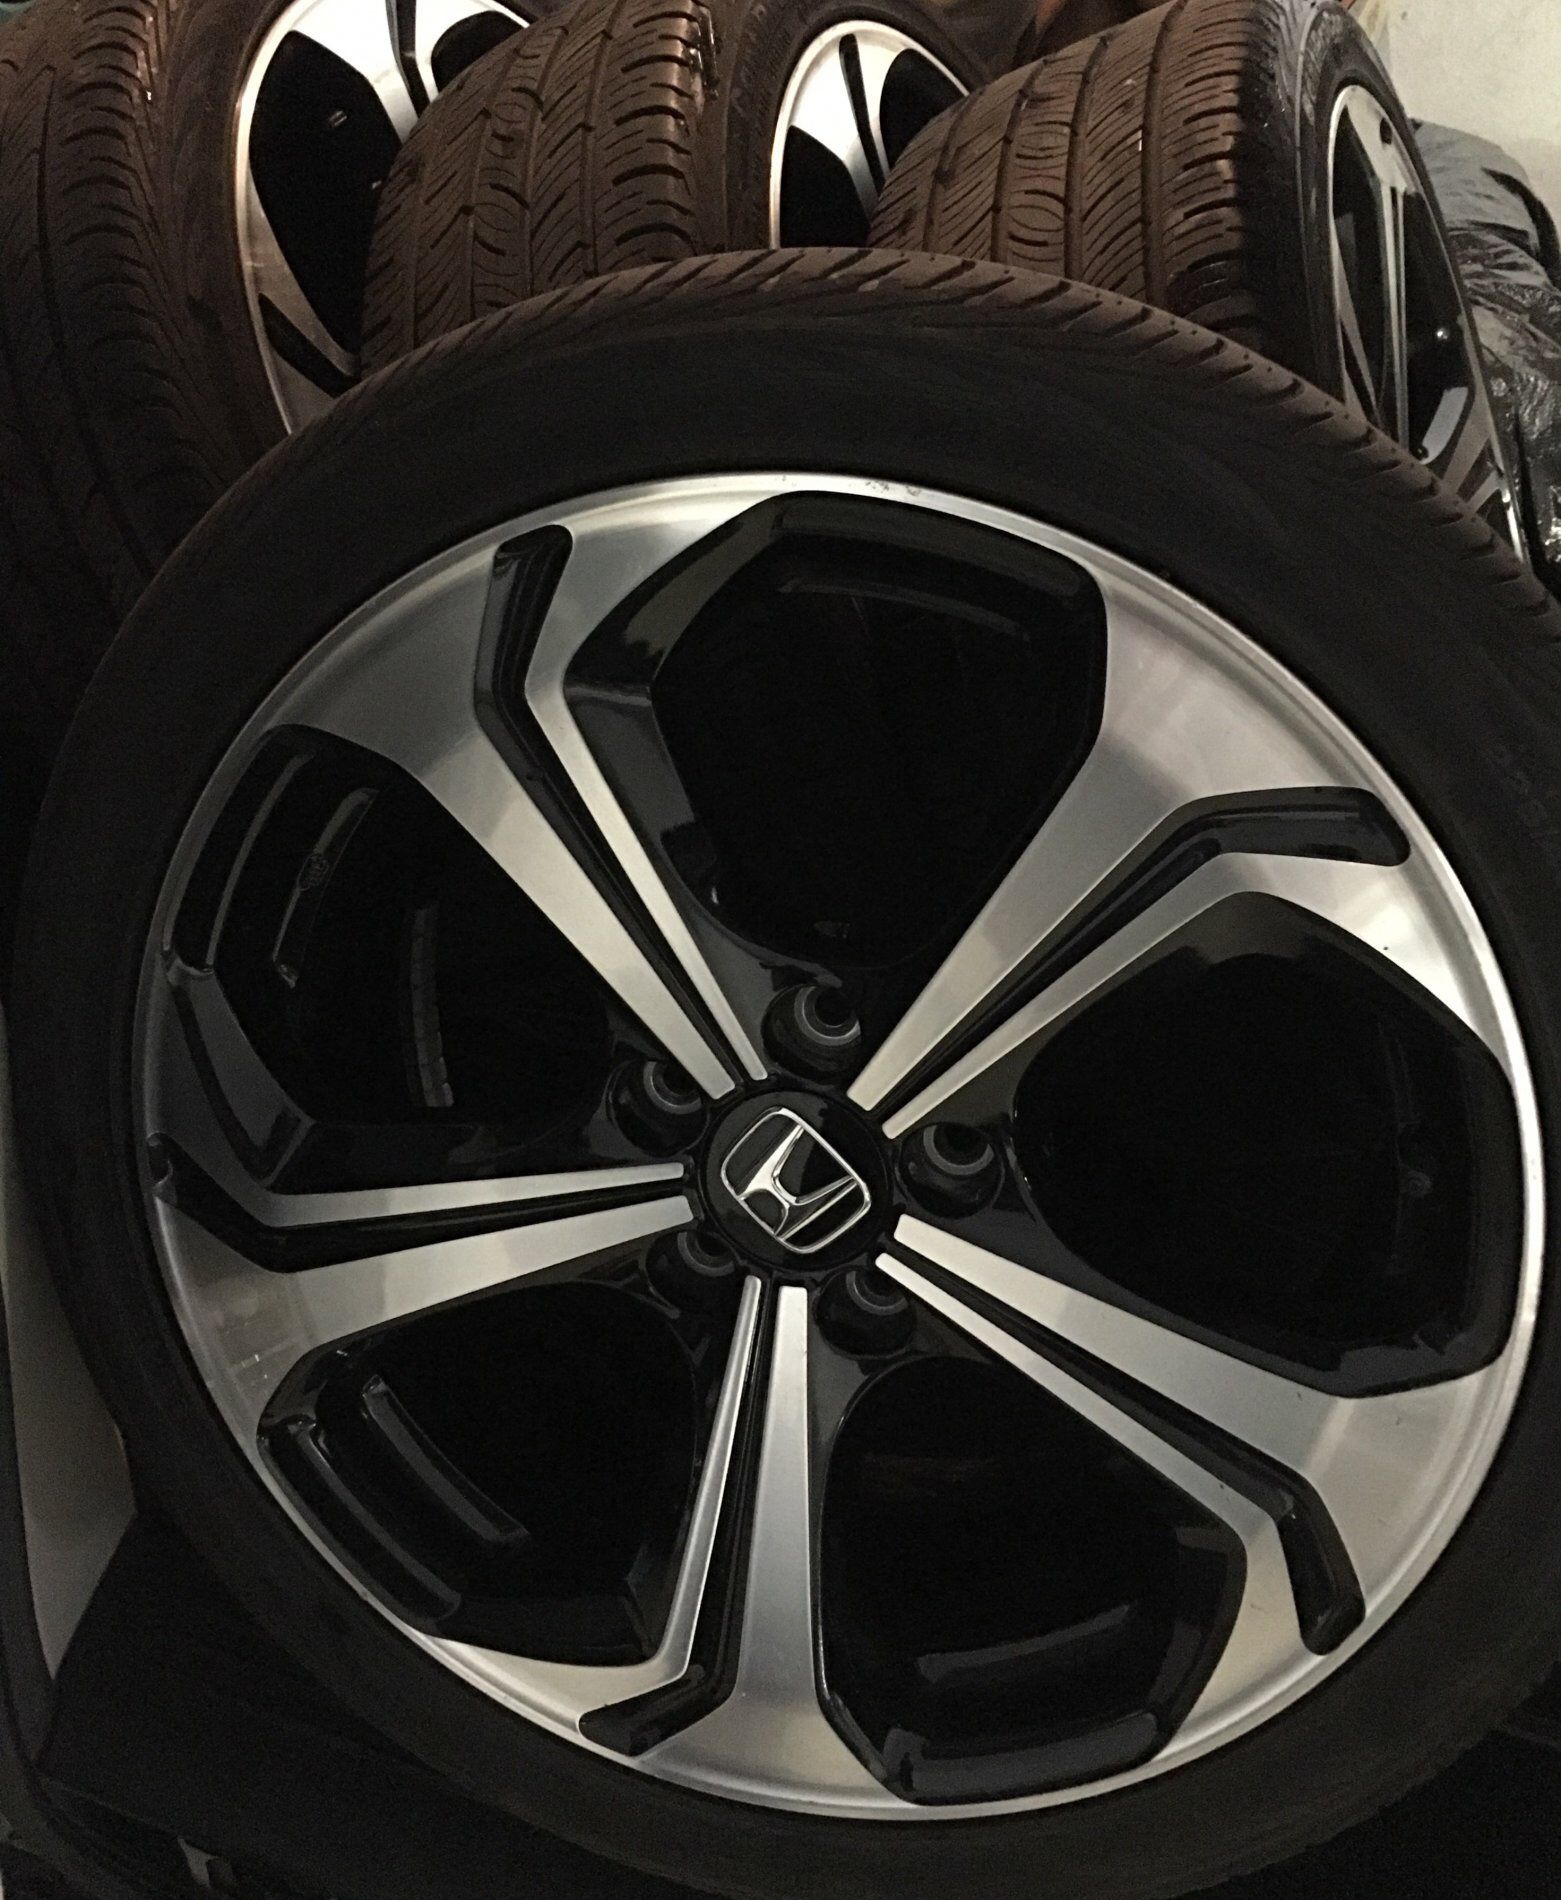 Selling 2015 Civic Si wheels 18”